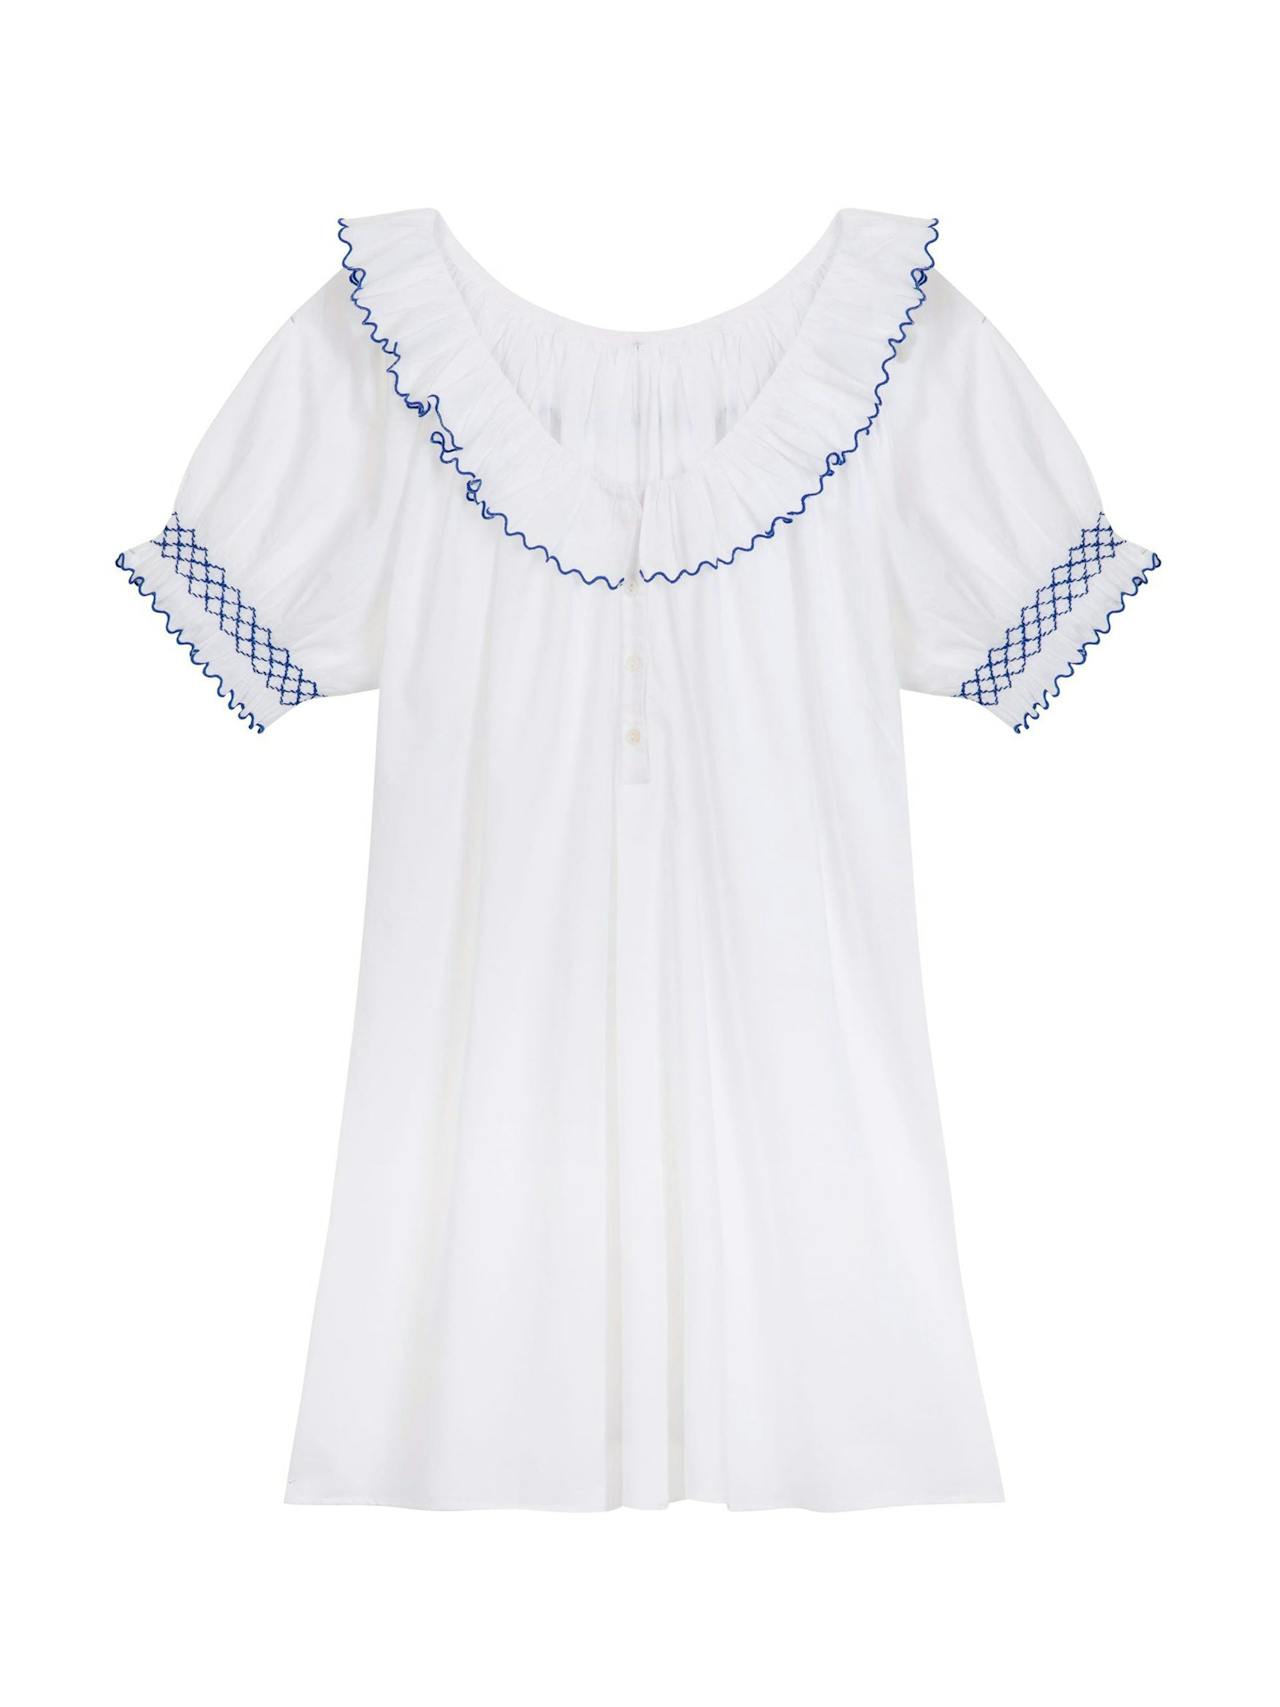 White cotton nightdress